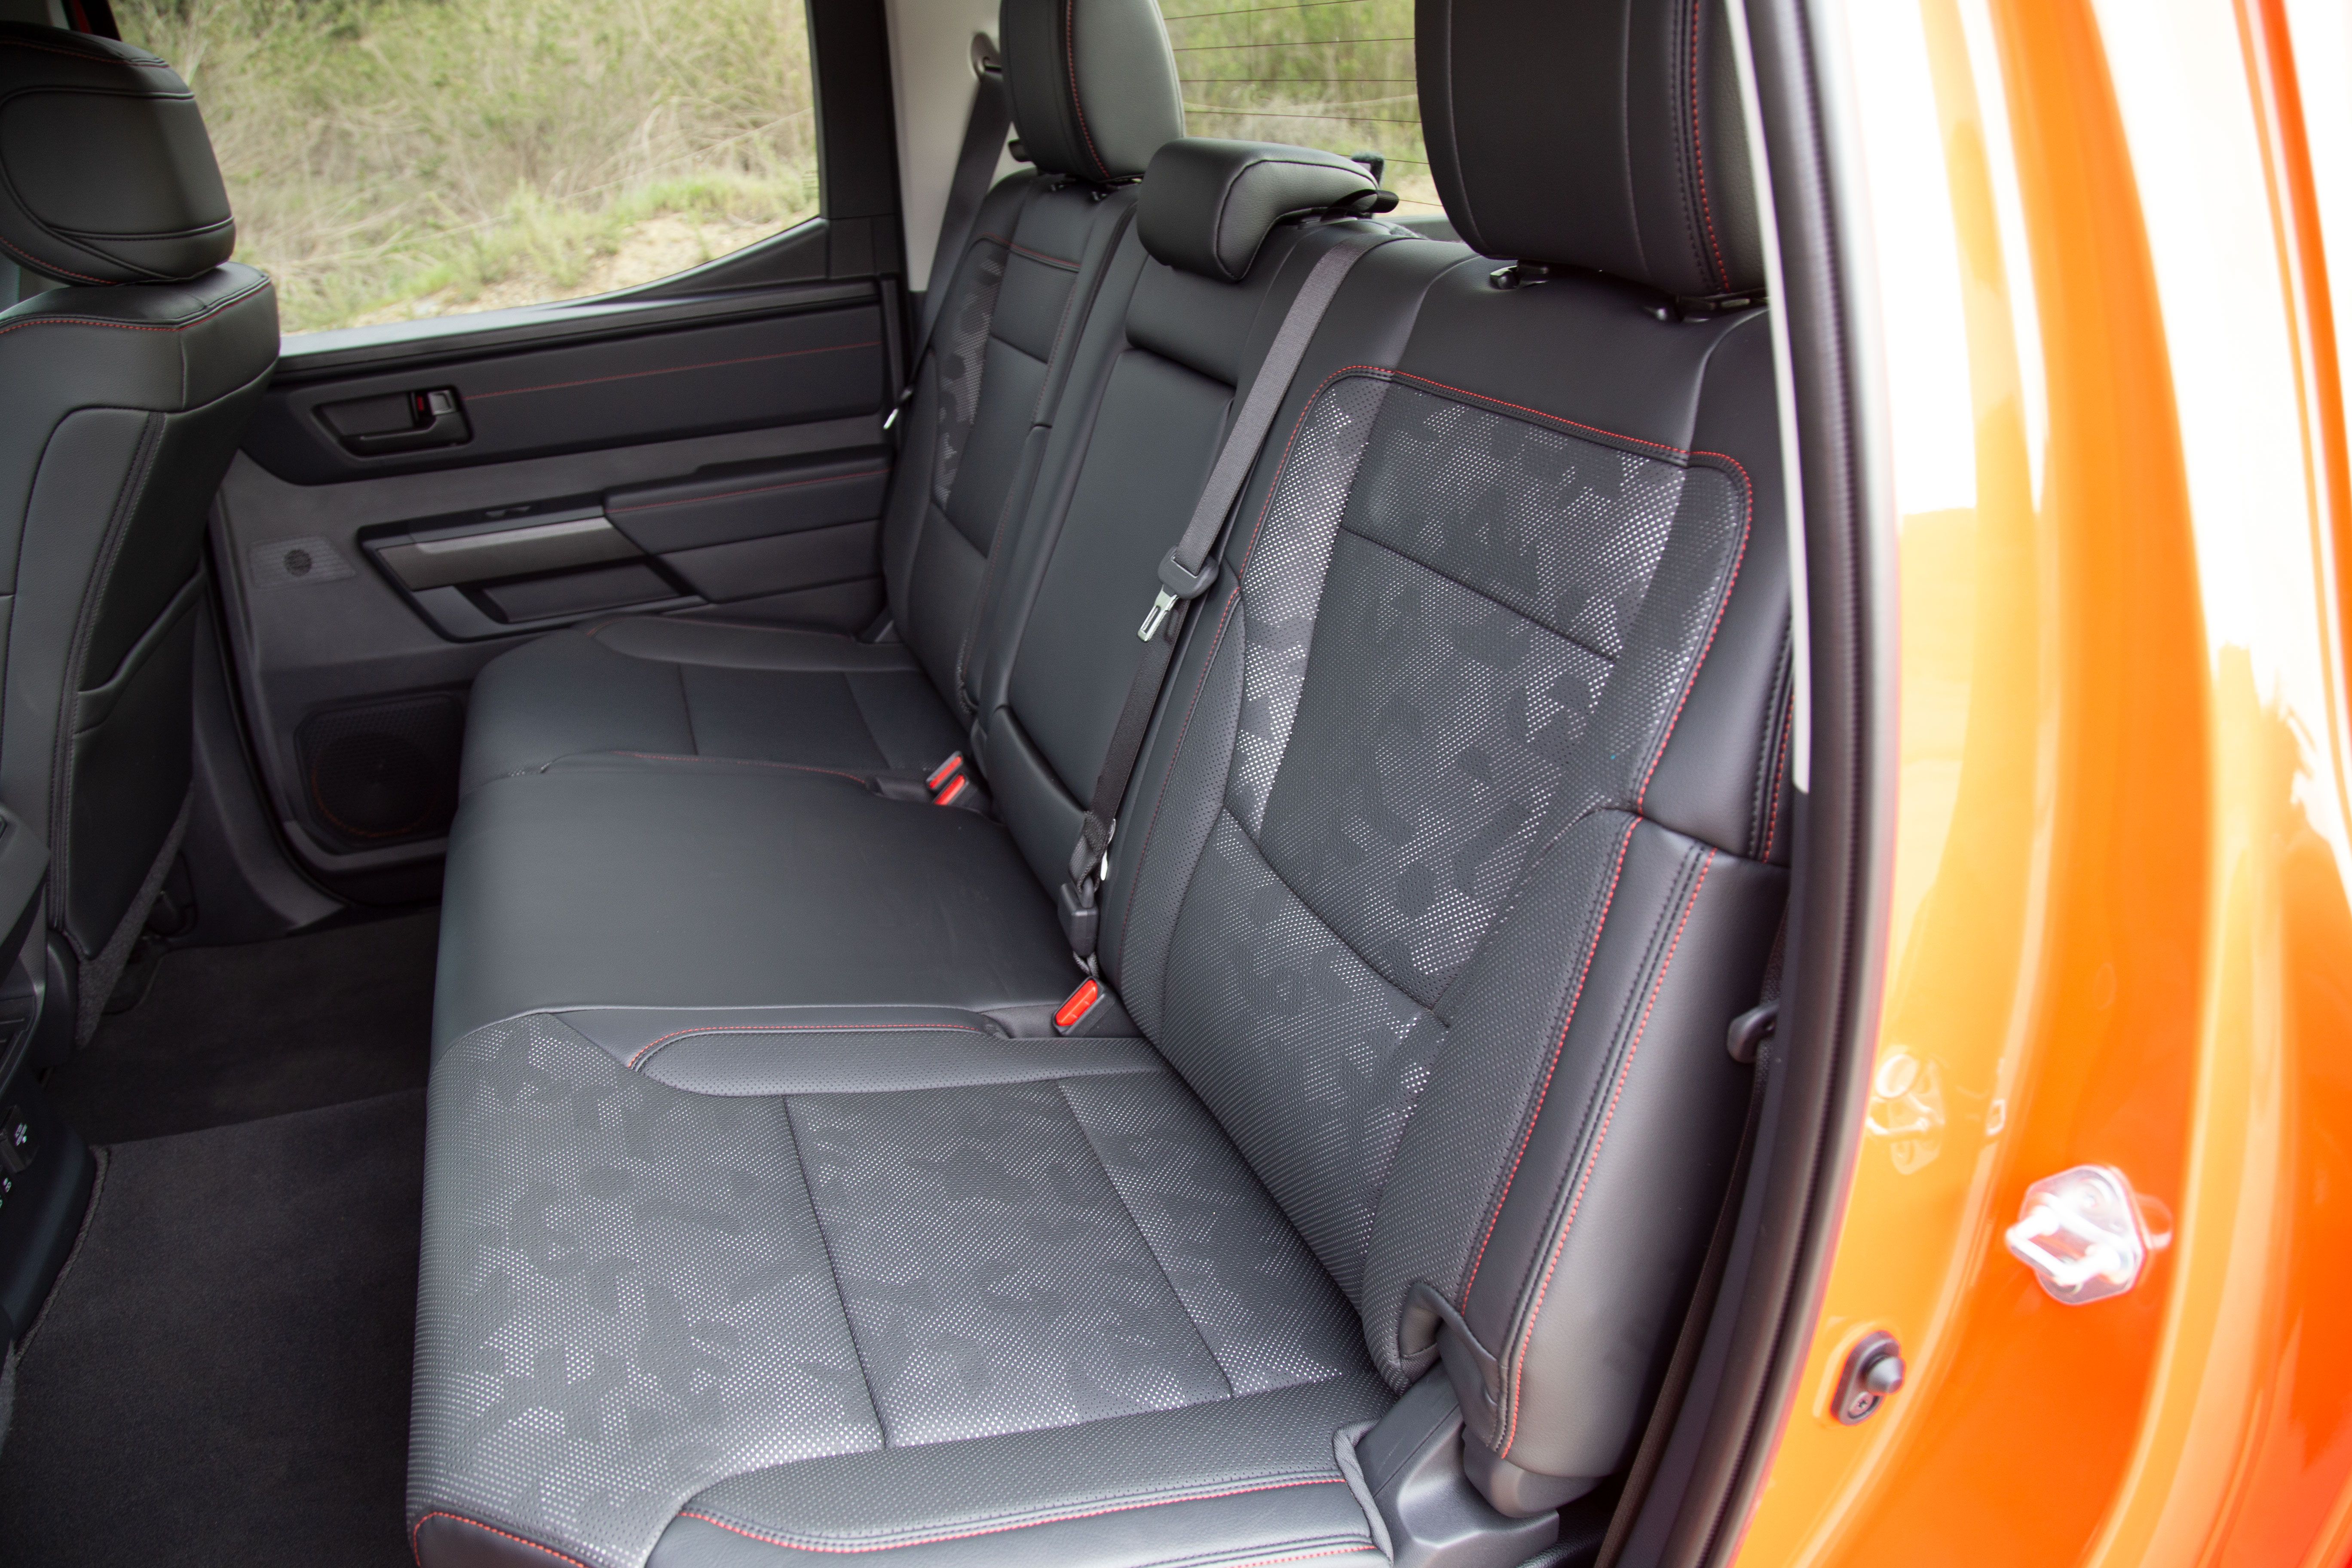 Toyota Tundra TRD Pro rear leather seats